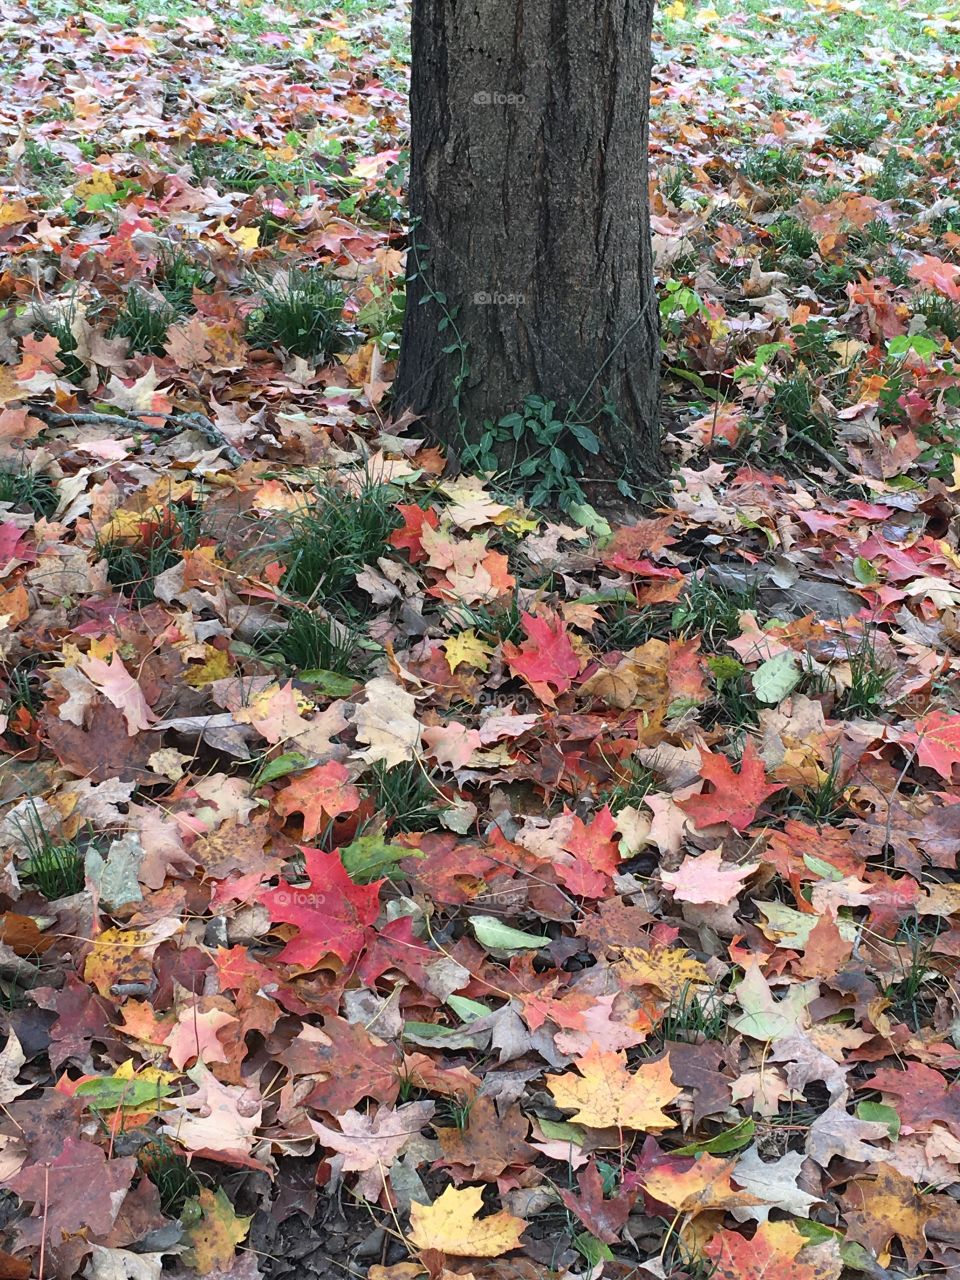 A blanket of leaves